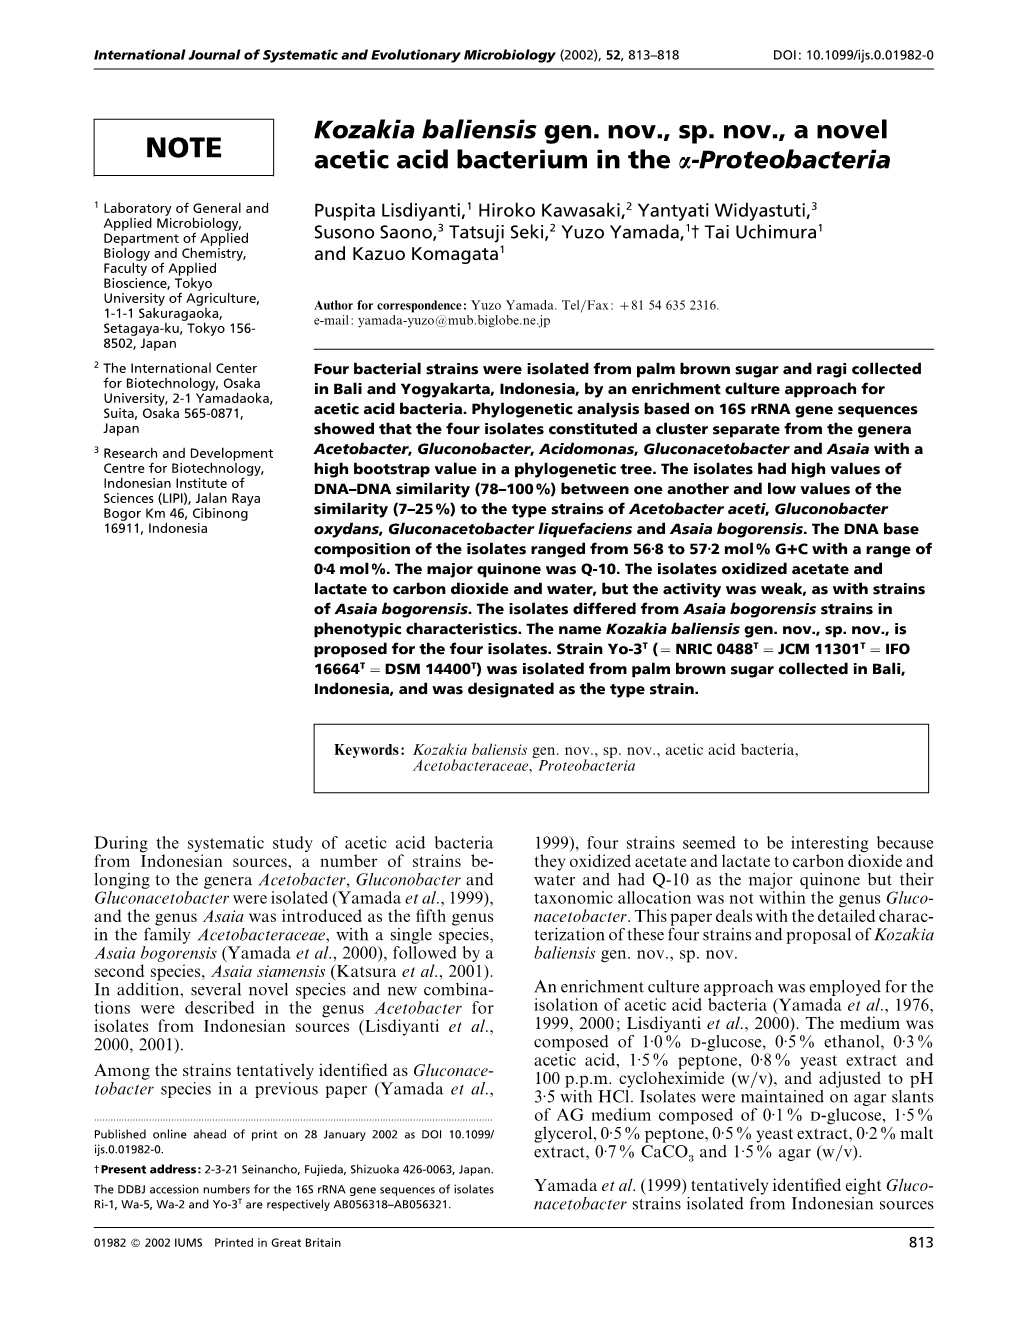 Kozakia Baliensis Gen. Nov., Sp. Nov., a Novel Acetic Acid Bacterium in the Α-Proteobacteria